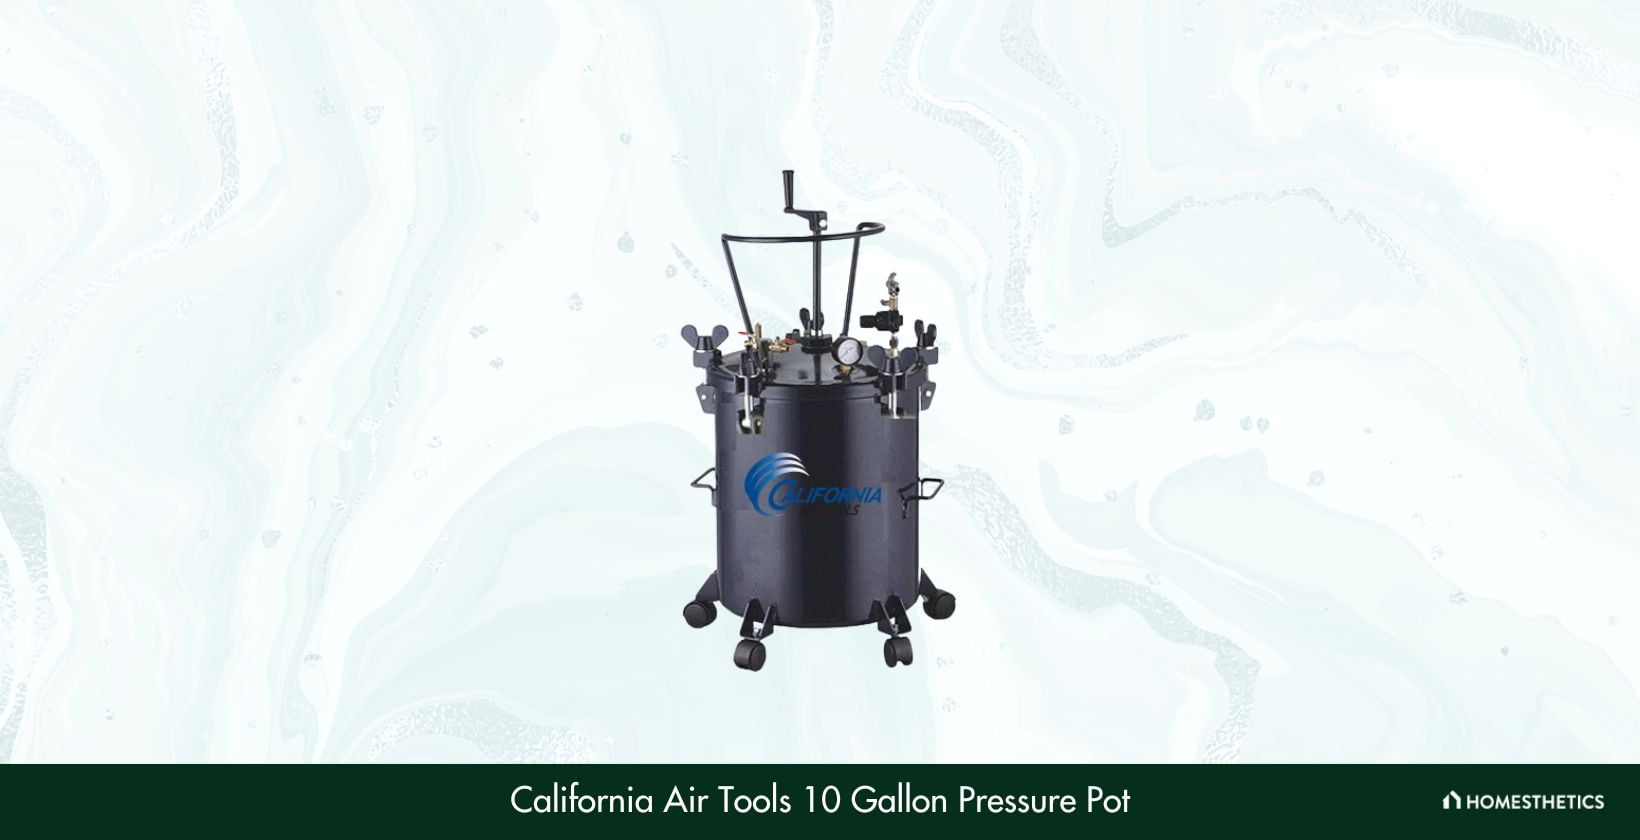 https://homesthetics.net/wp-content/uploads/2022/01/California-Air-Tools-10-Gallon-Pressure-Pot.jpg